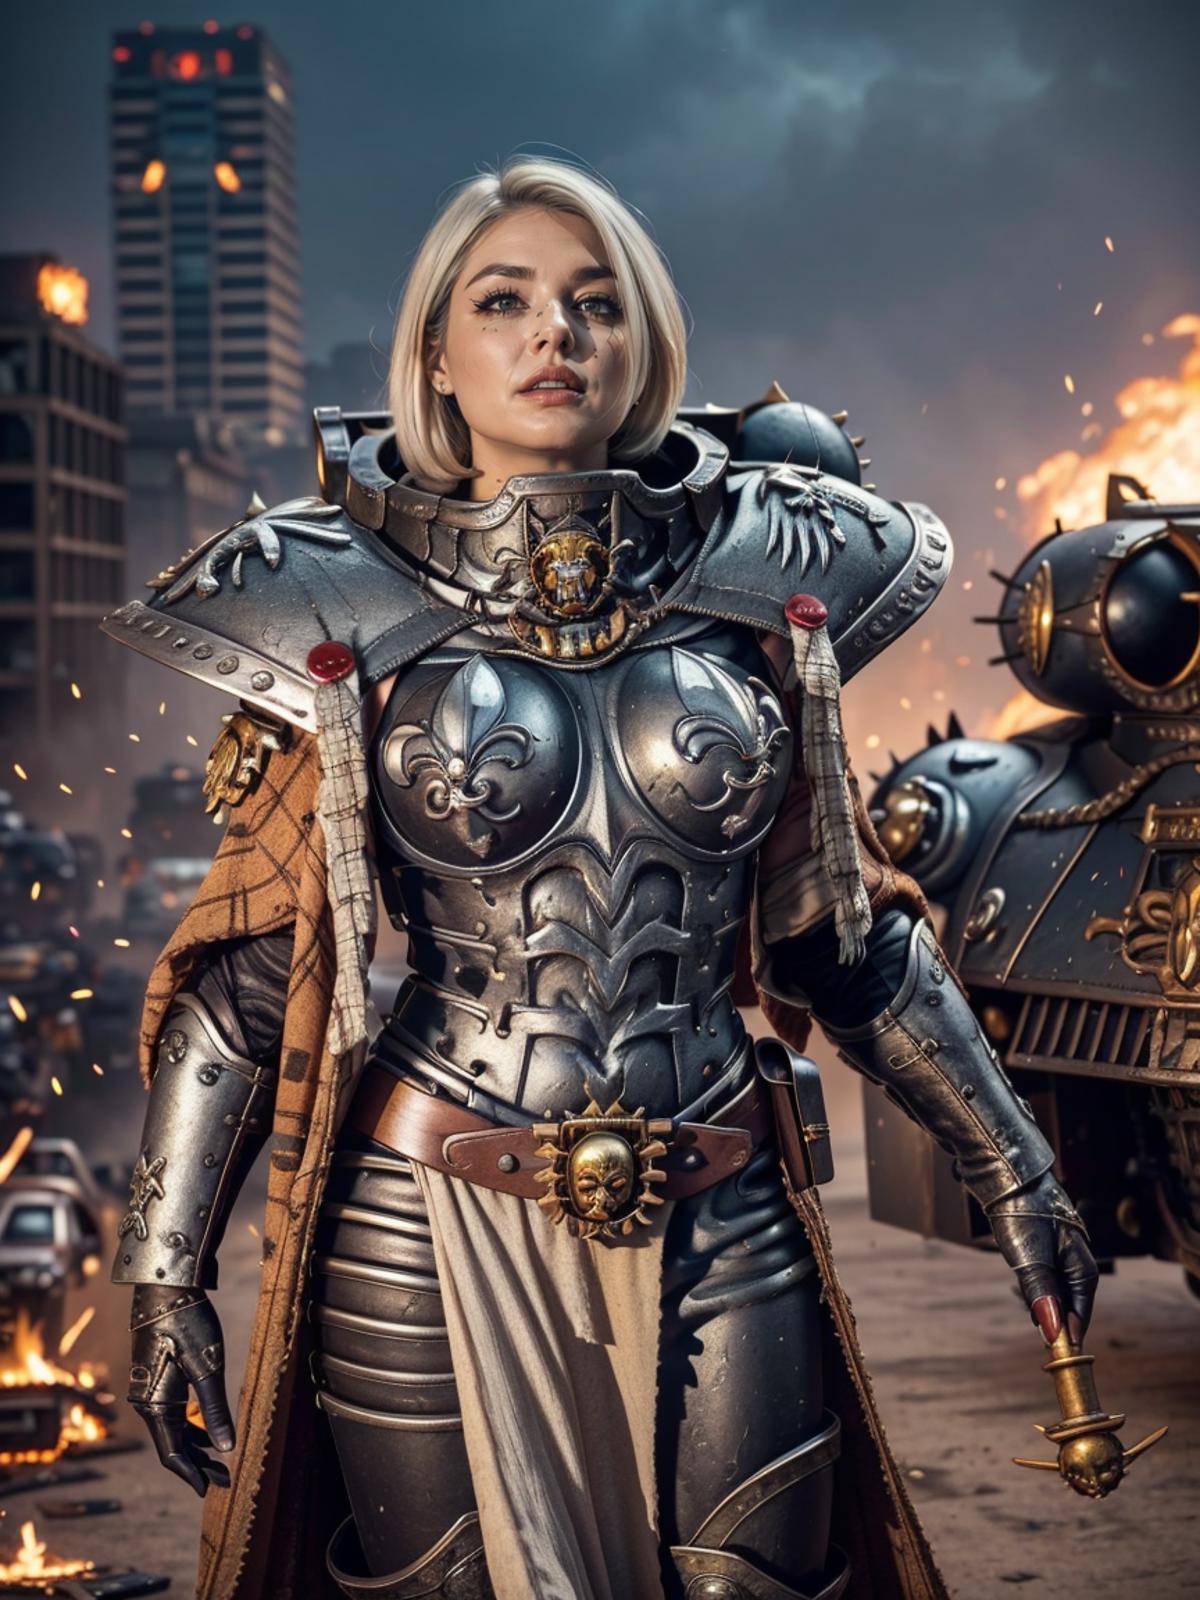 Warhammer 40K Adepta Sororitas Sister of Battle armor - by EDG image by MoltenHeart